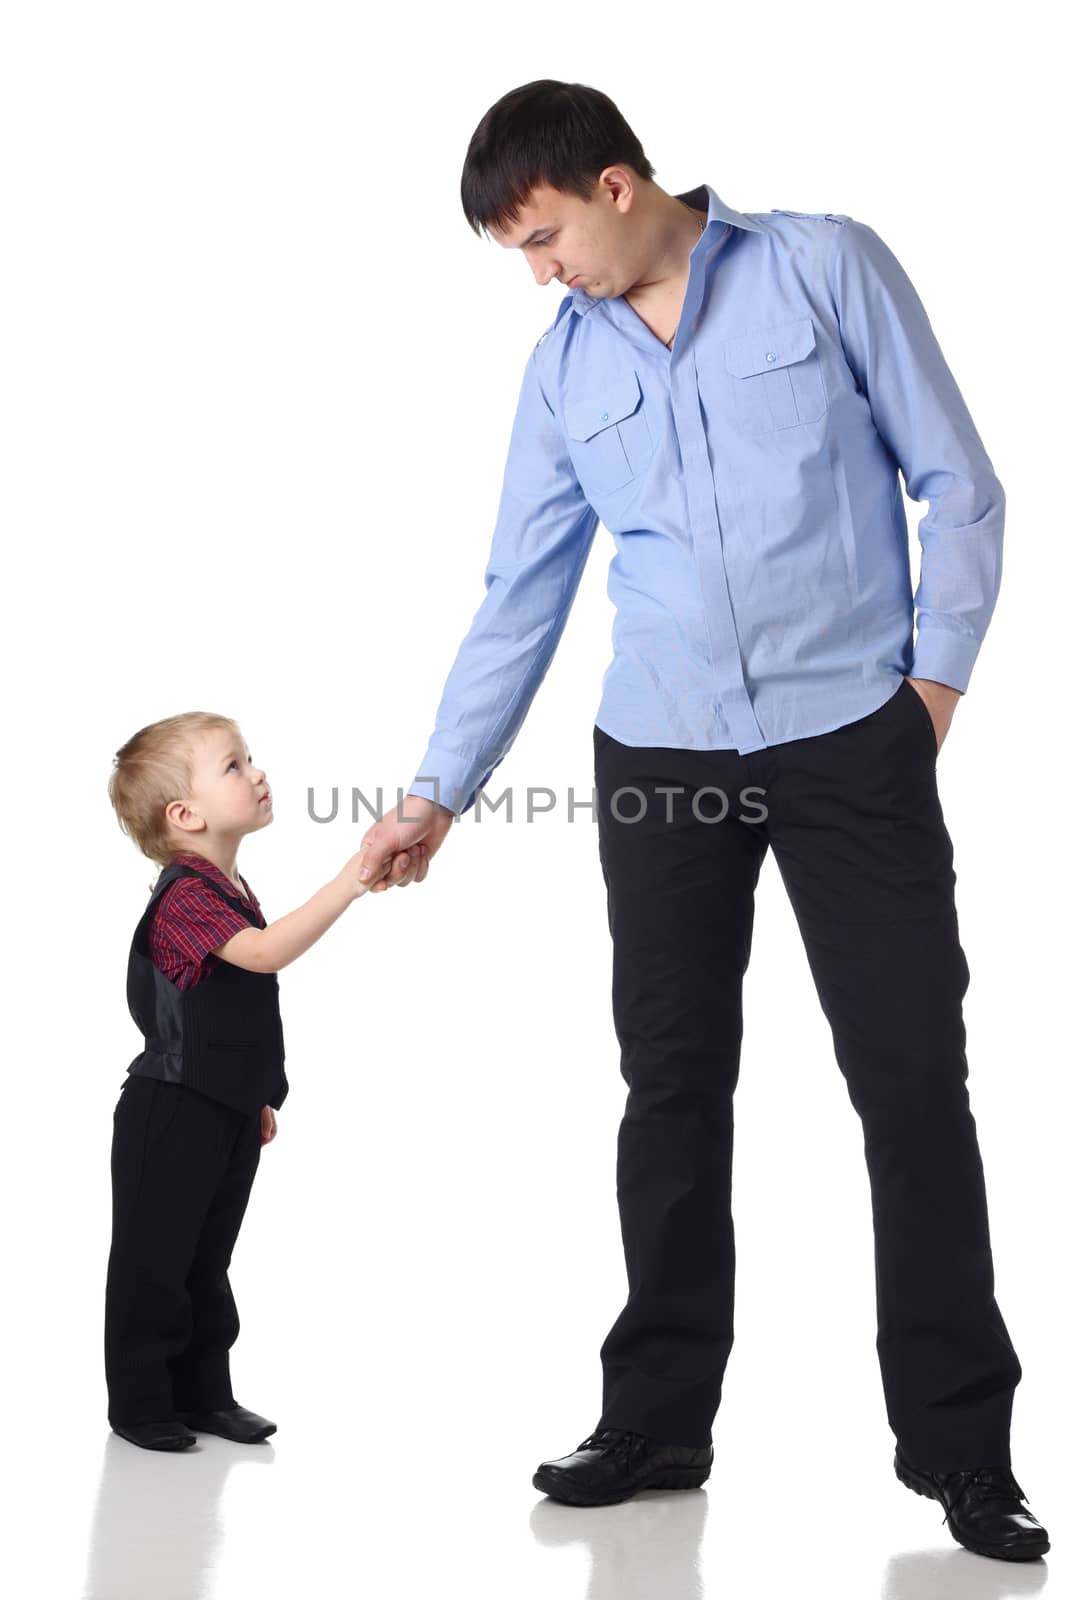 Handshake of man and boy by dedmorozz